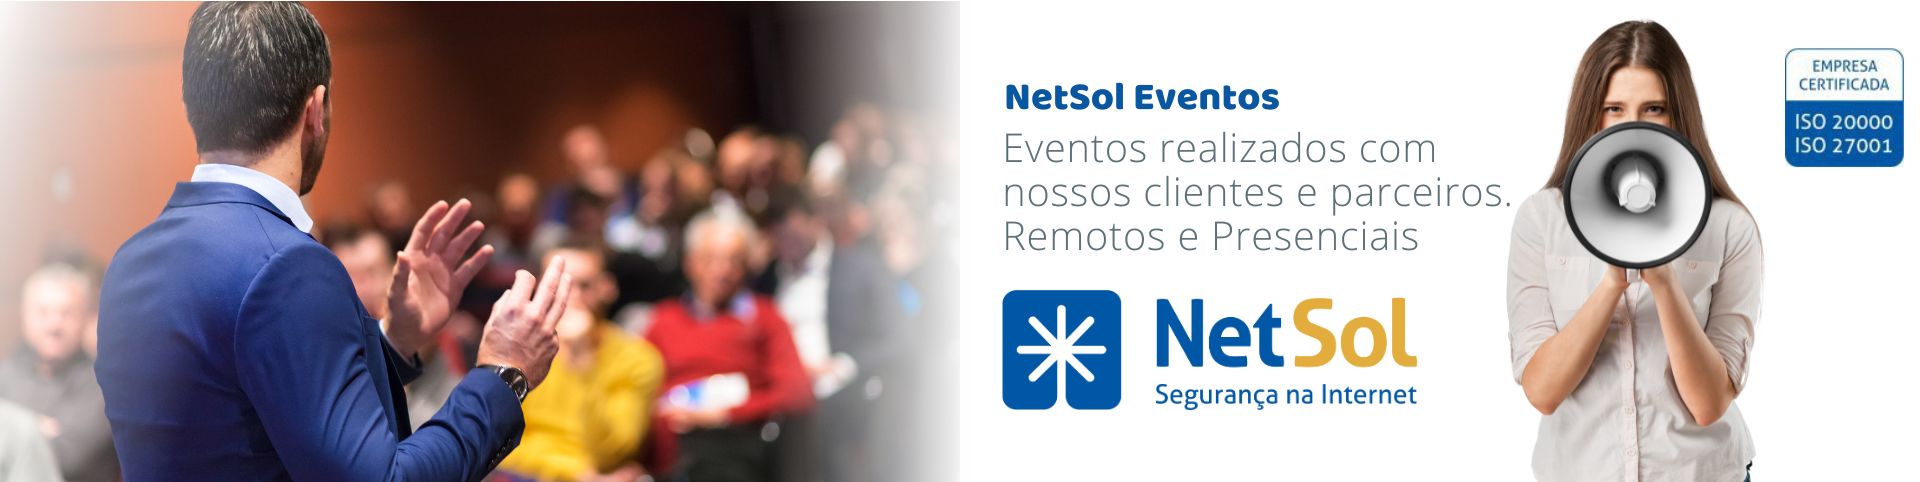 NetSol_Eventos